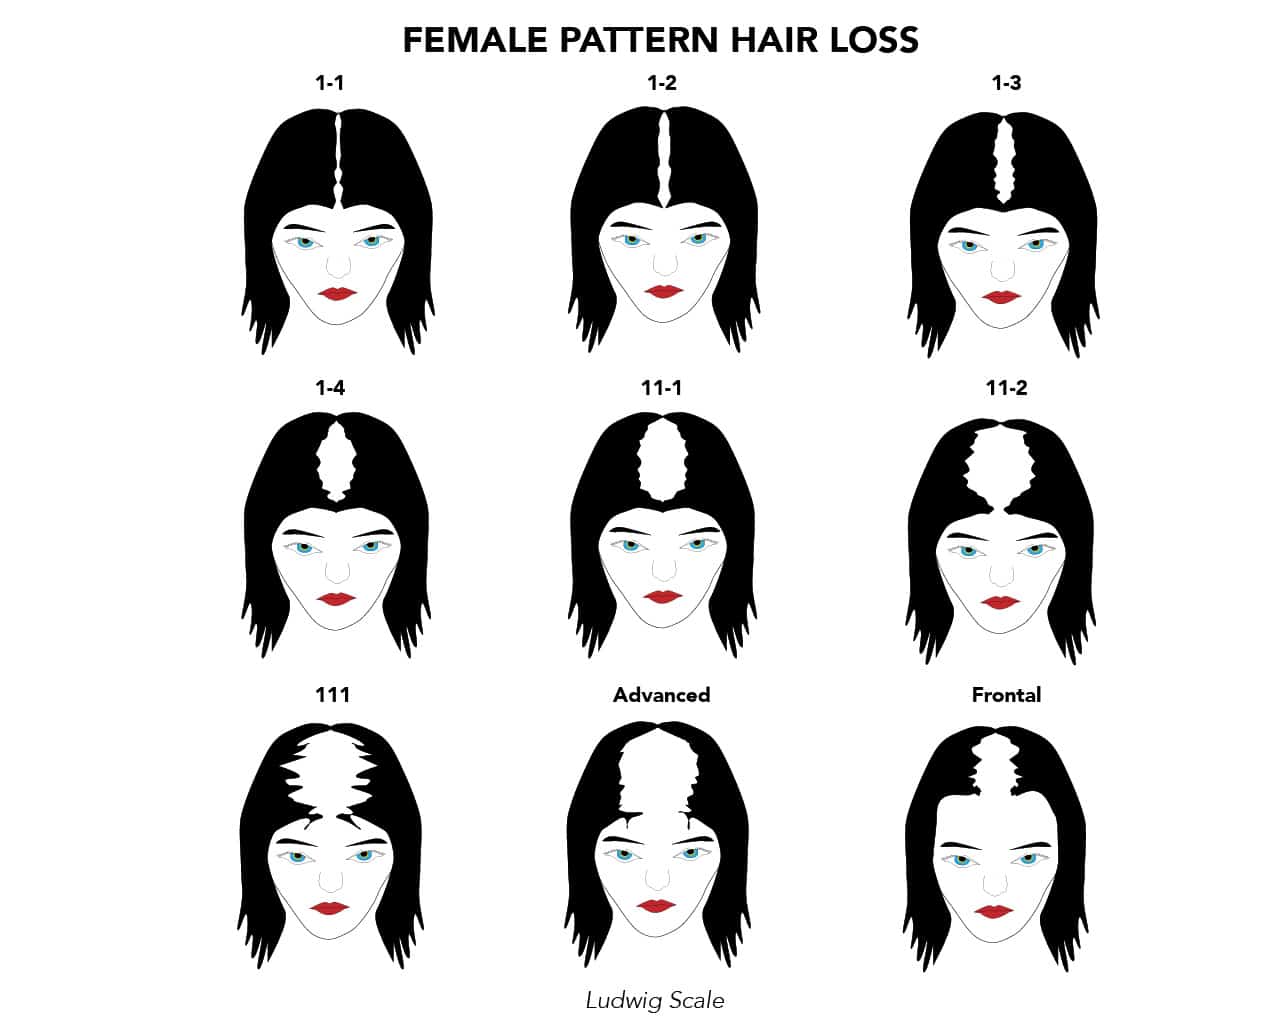 Female-hair-loss-ludwig-scale